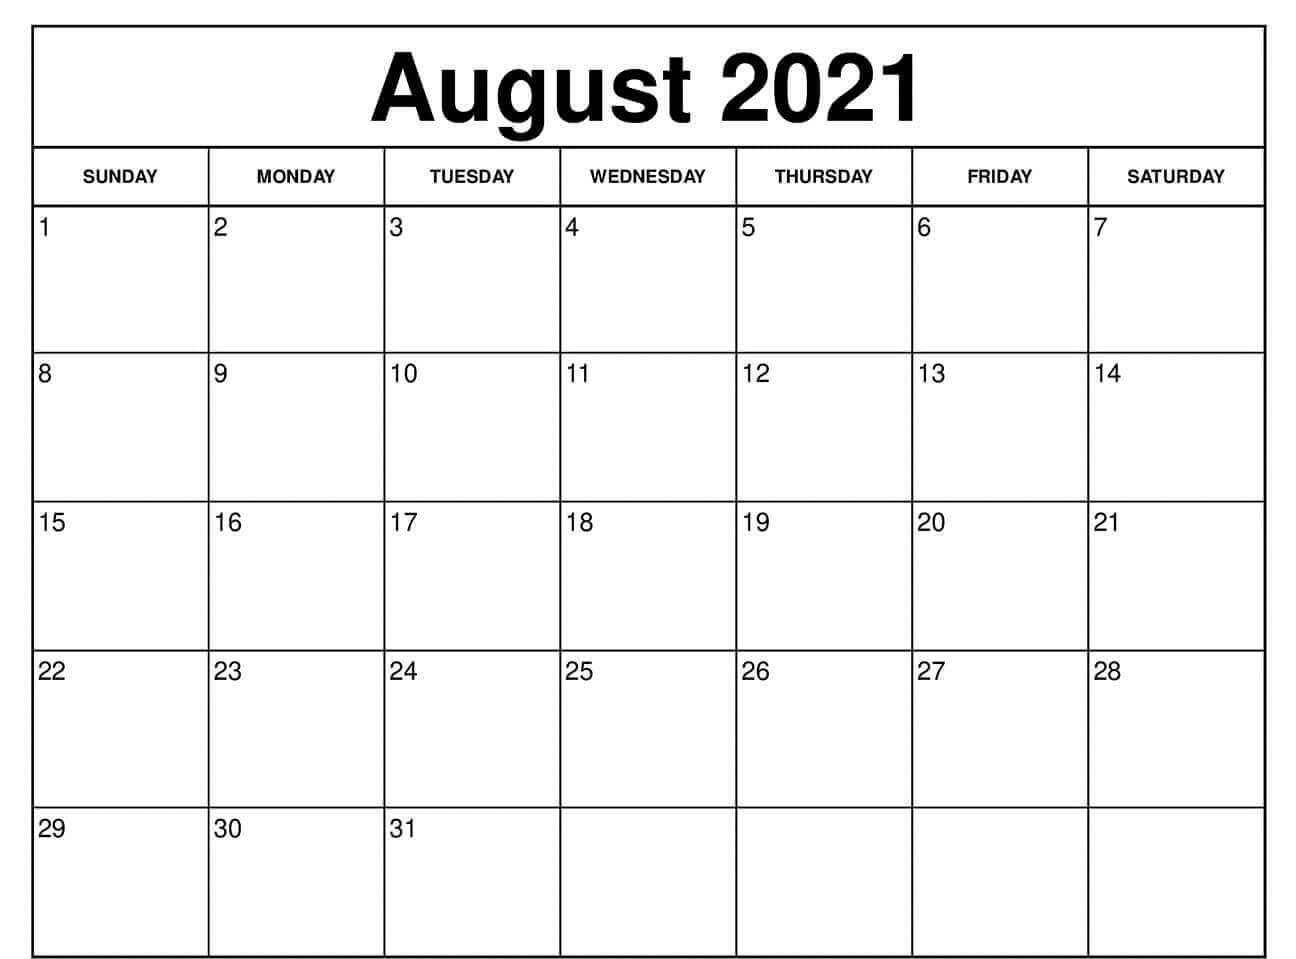 August 2021 Calendar Printable with Holidays